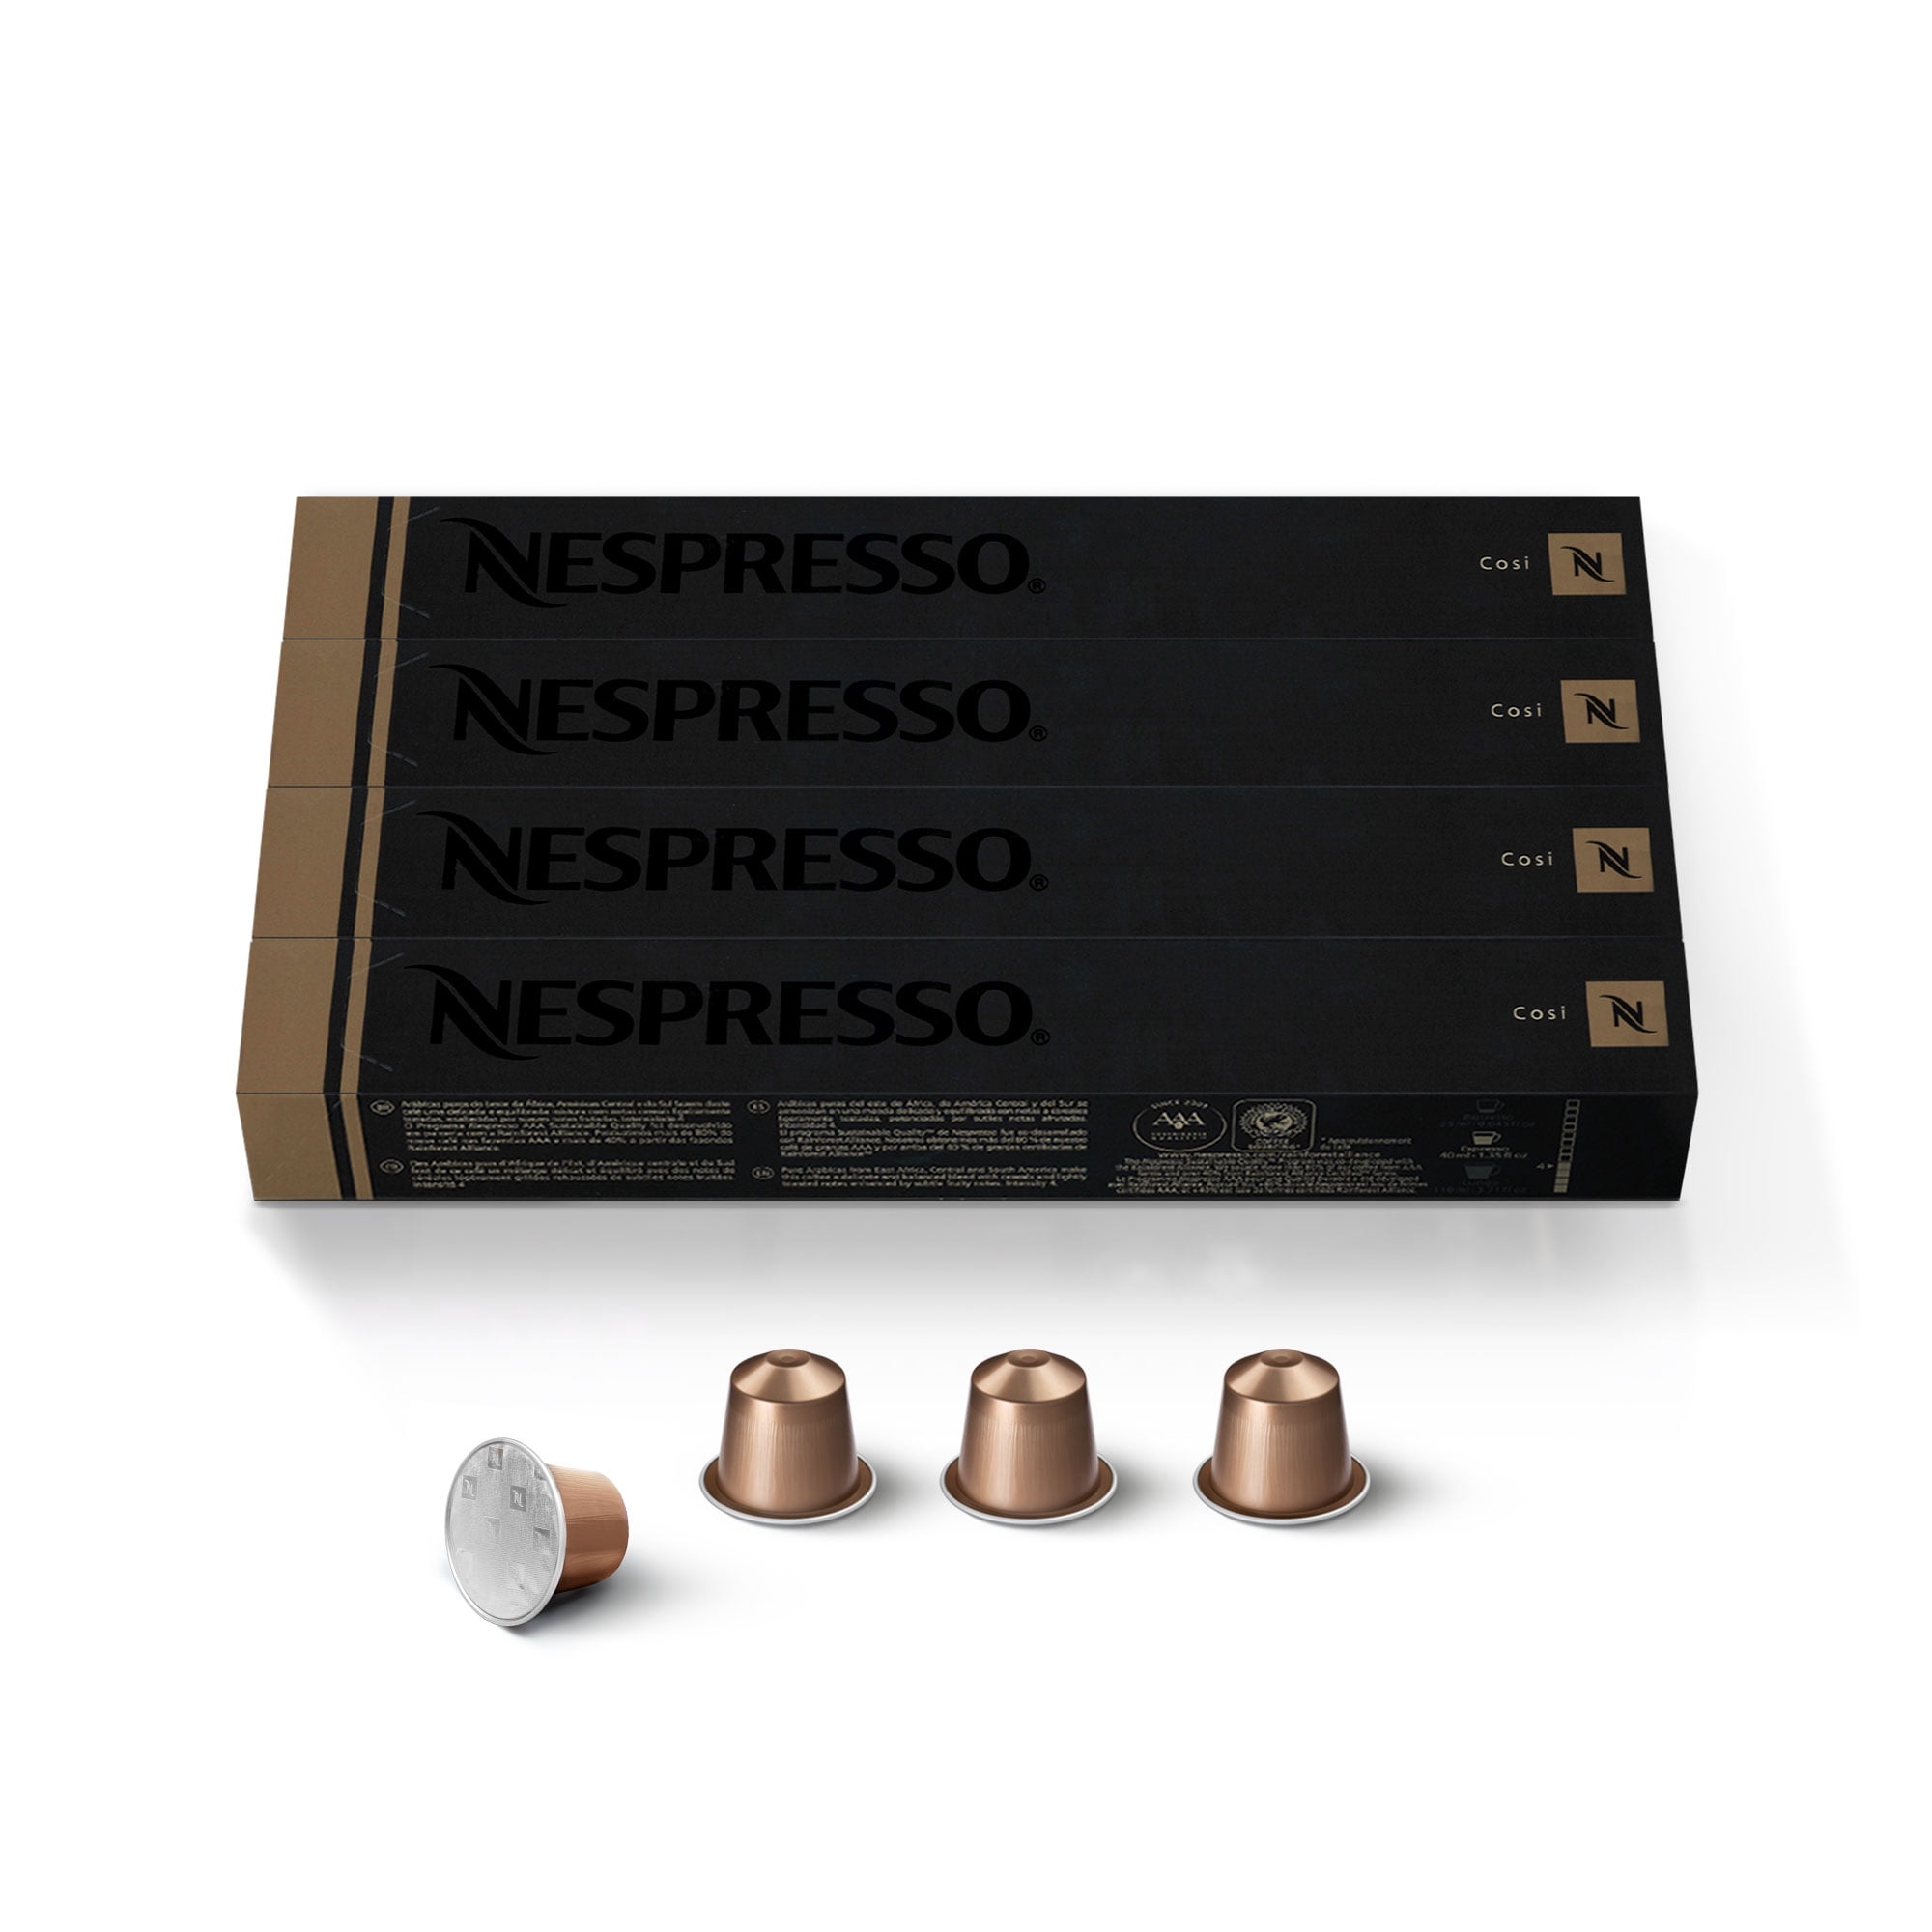 Nespresso Rainforest Alliance, Cosi Light Roast OriginalLine Coffee Pods,  40 Ct (4 Boxes of 10)